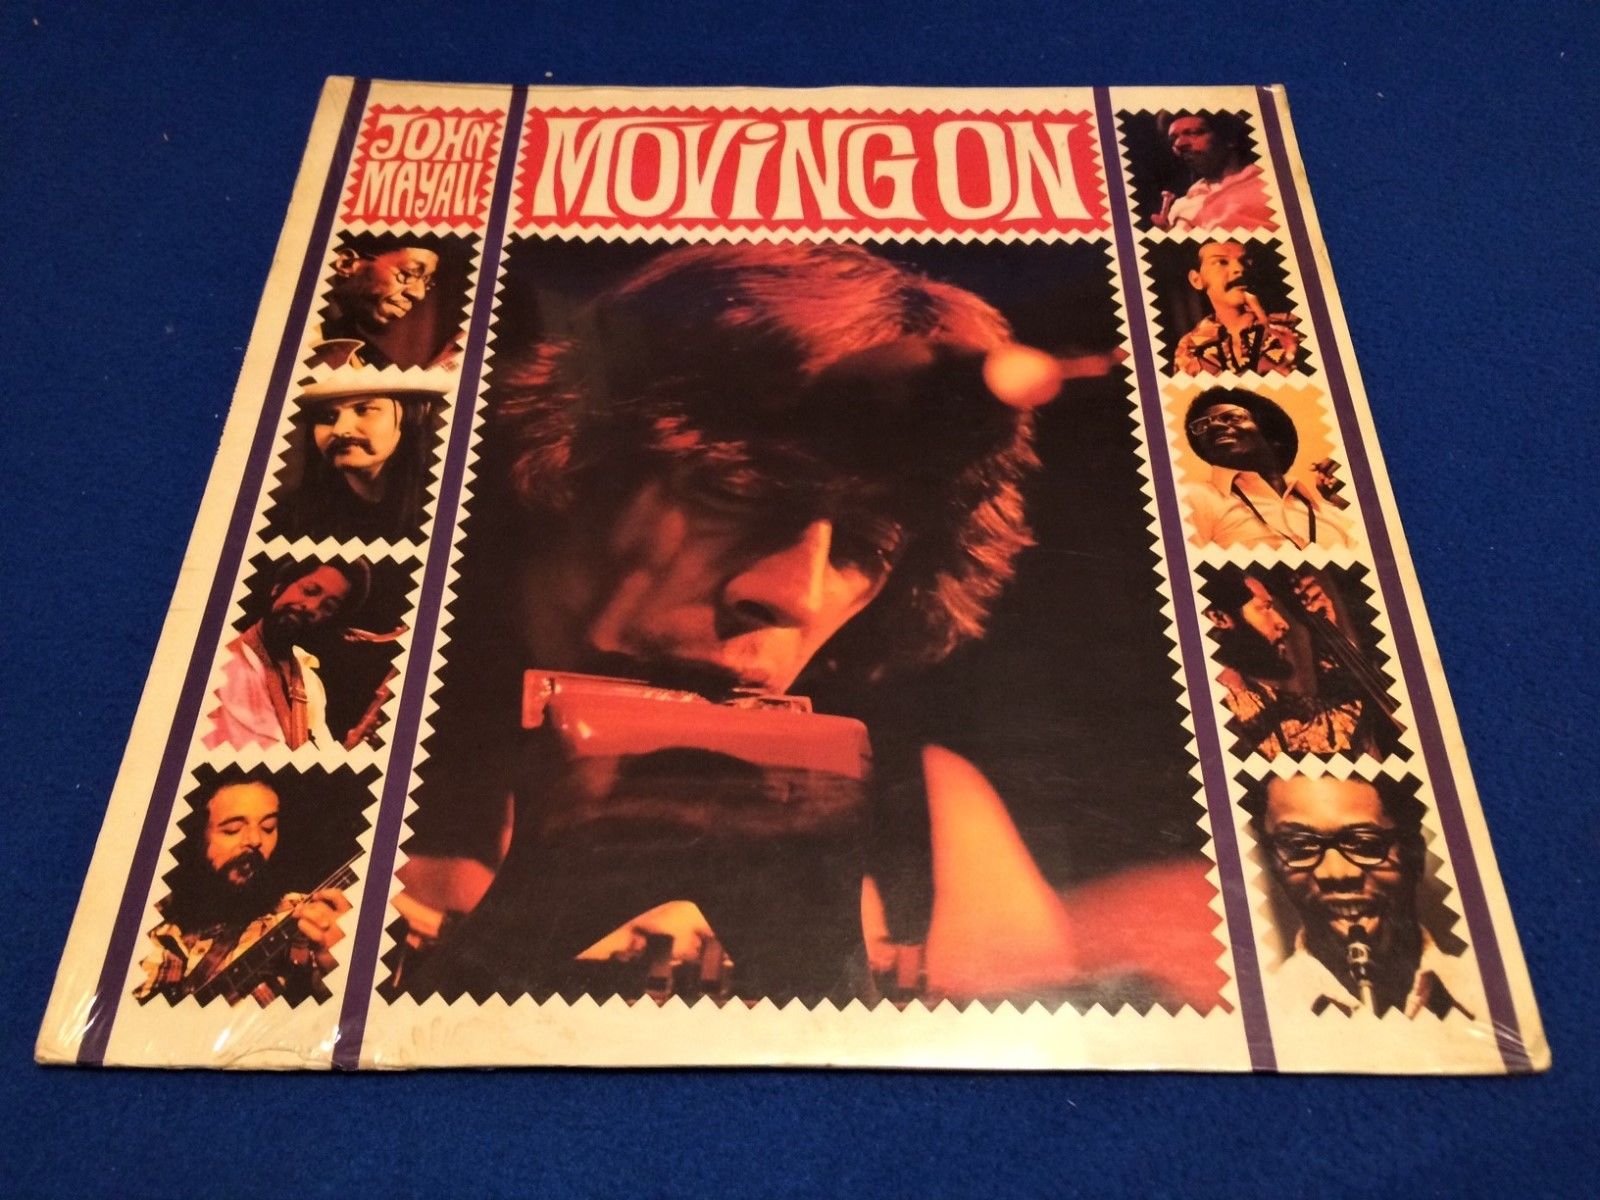 JOHN MAYALL Moving On STILL SEALED LP original pressing POLYDOR 5036 blues rock